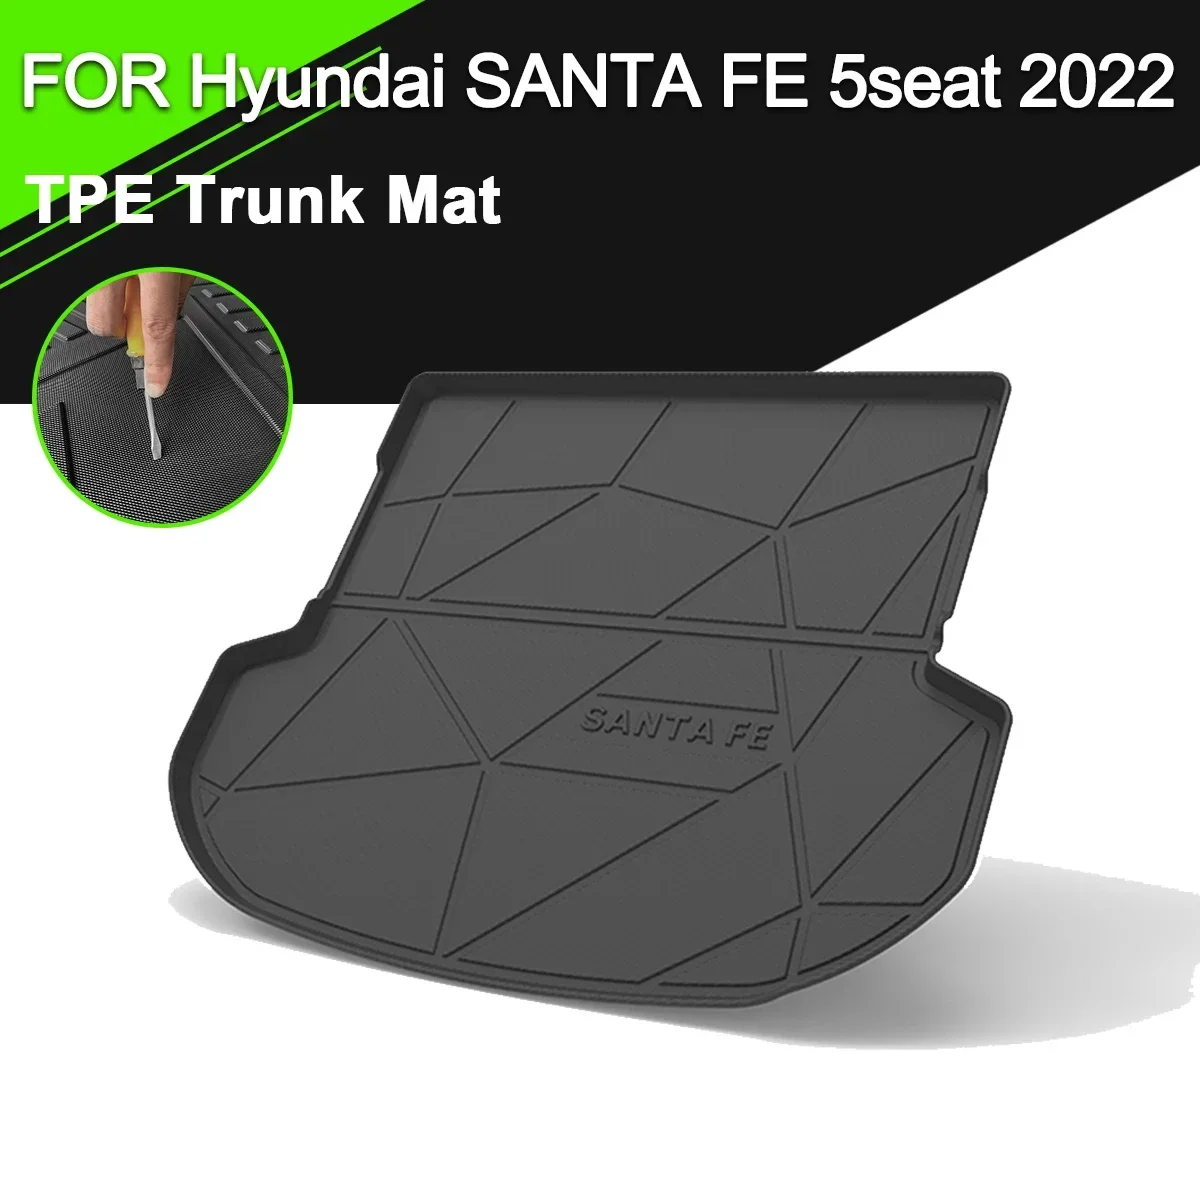 

Car Rear Trunk Cover Mat TPE Waterproof Non-Slip Rubber Cargo Liner Accessories For Hyundai Santafe 5 Seater 2022